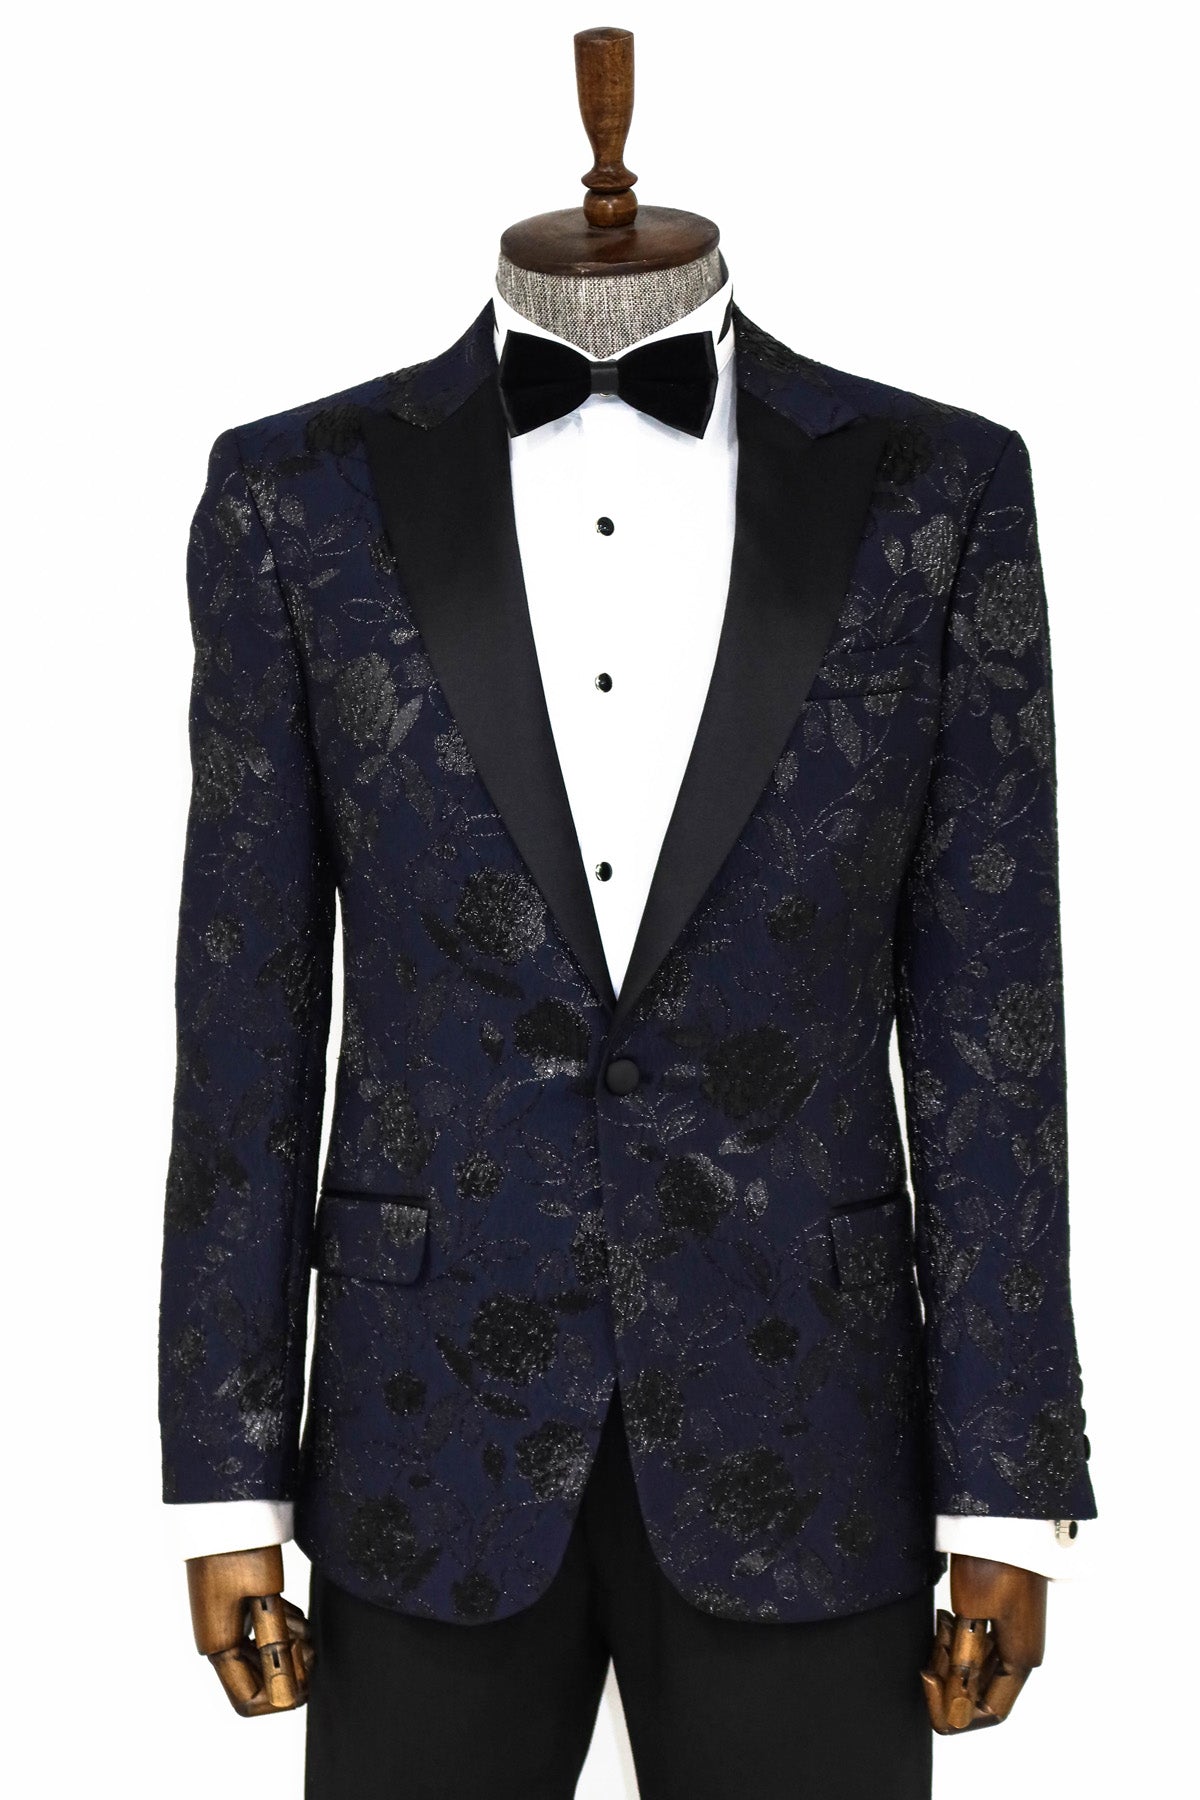 Men's Navy Blazer with Black Floral Design - Front ViewMen's Navy Blazer with Dark Grey Floral Design - Front View